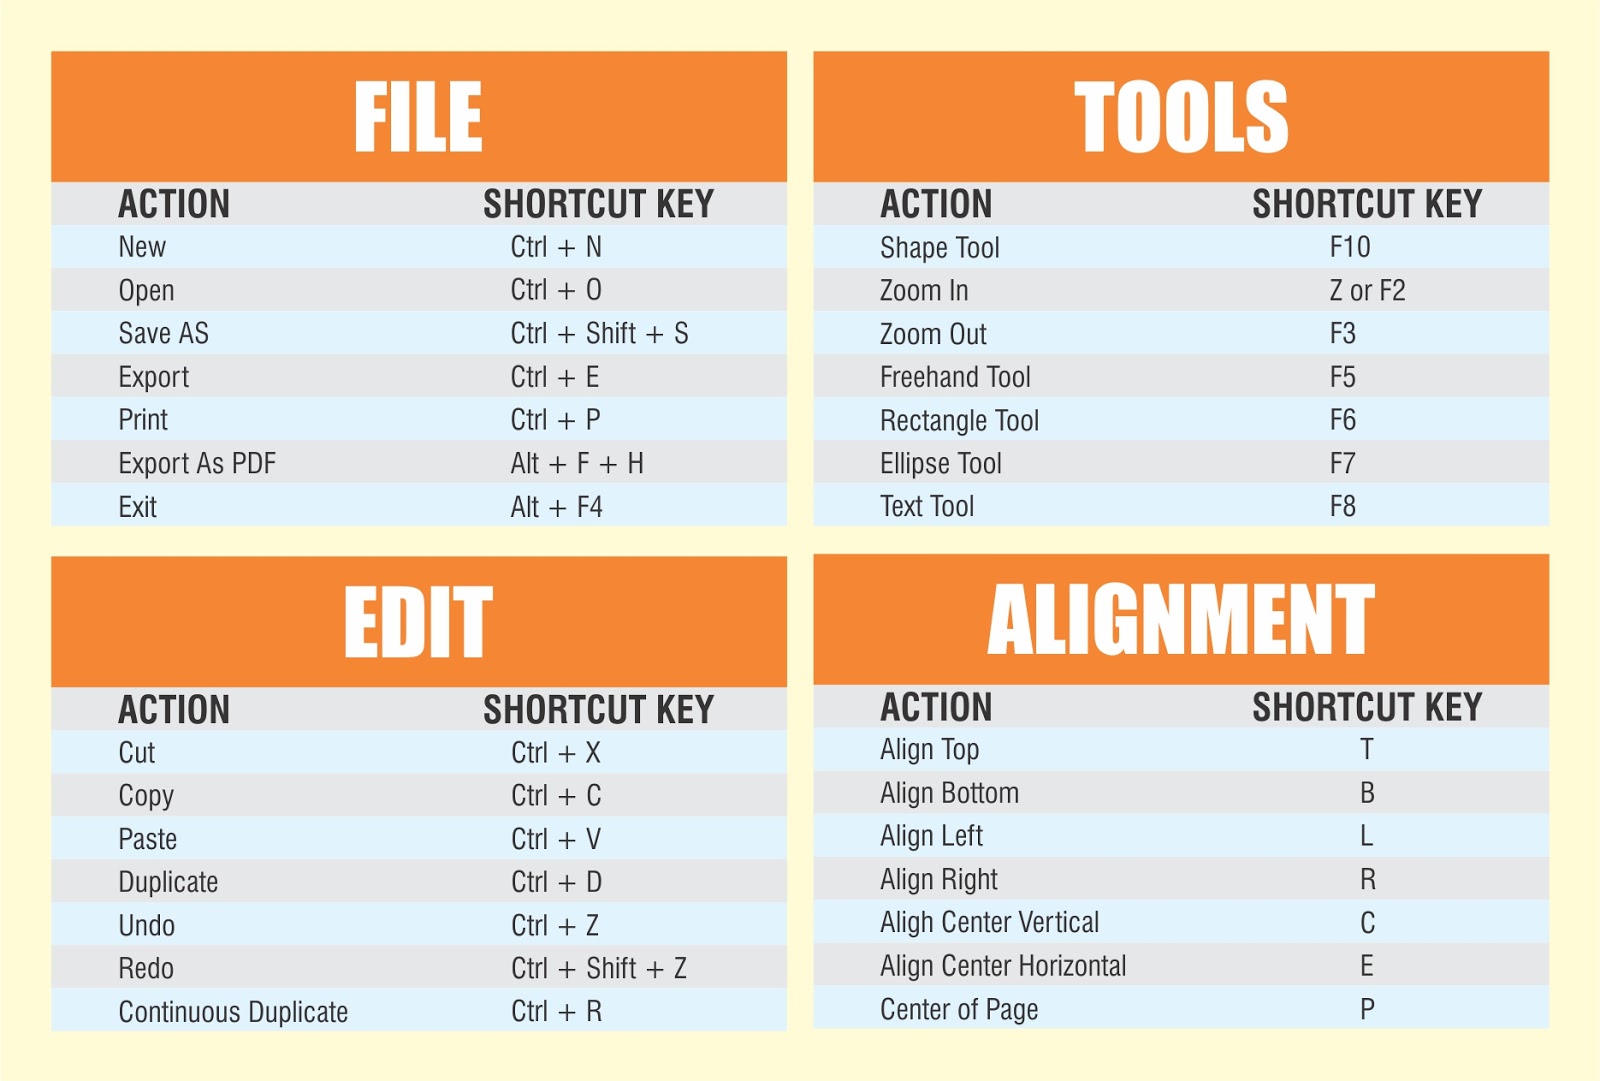 coreldraw shortcut keys pdf download